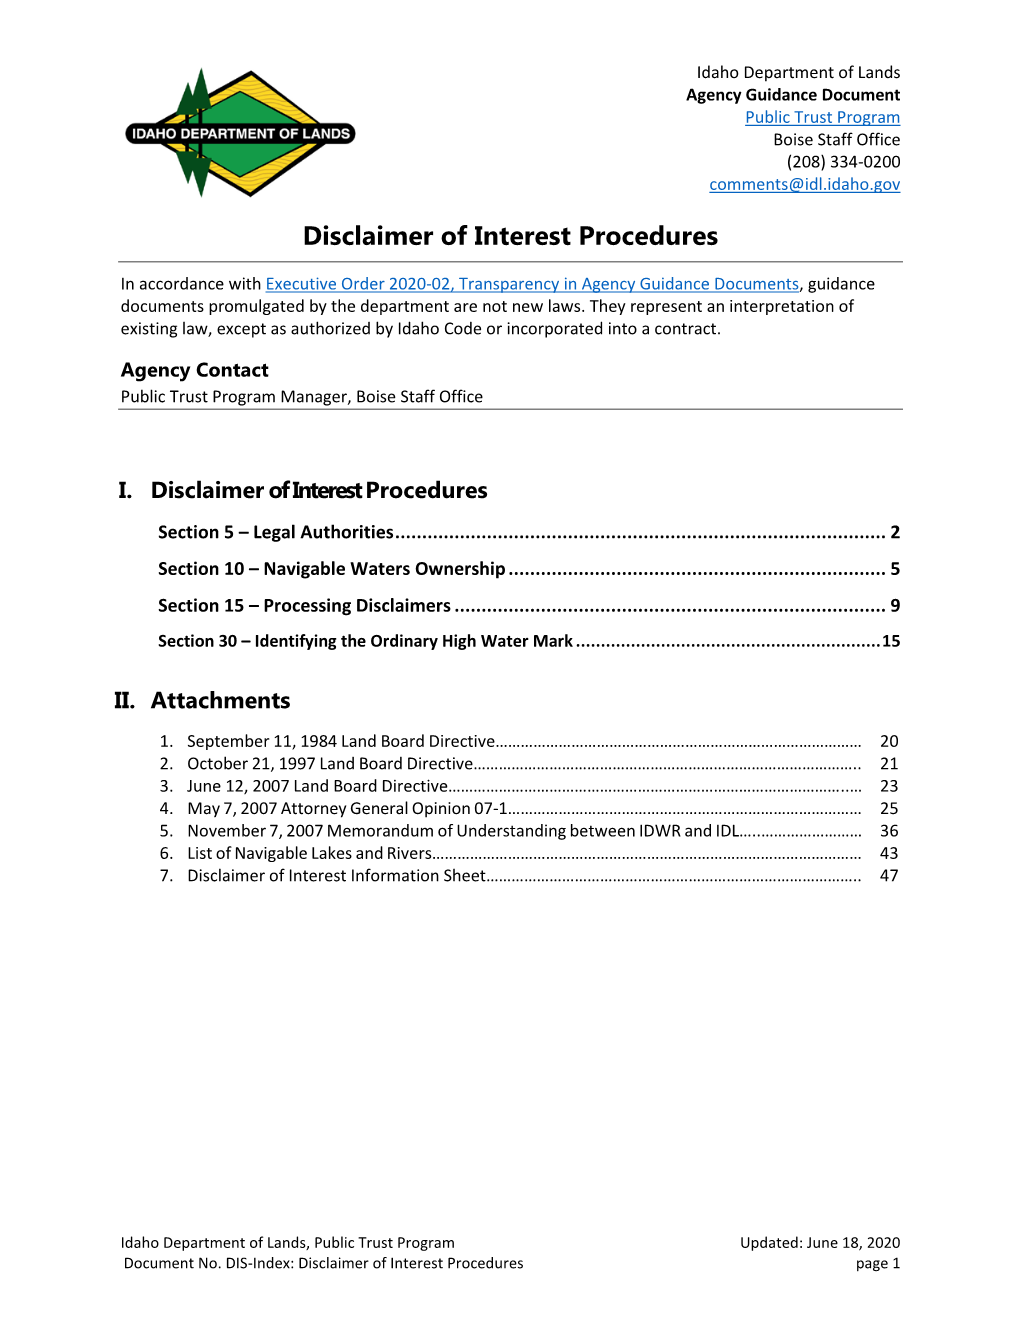 Disclaimers of Interest Procedures